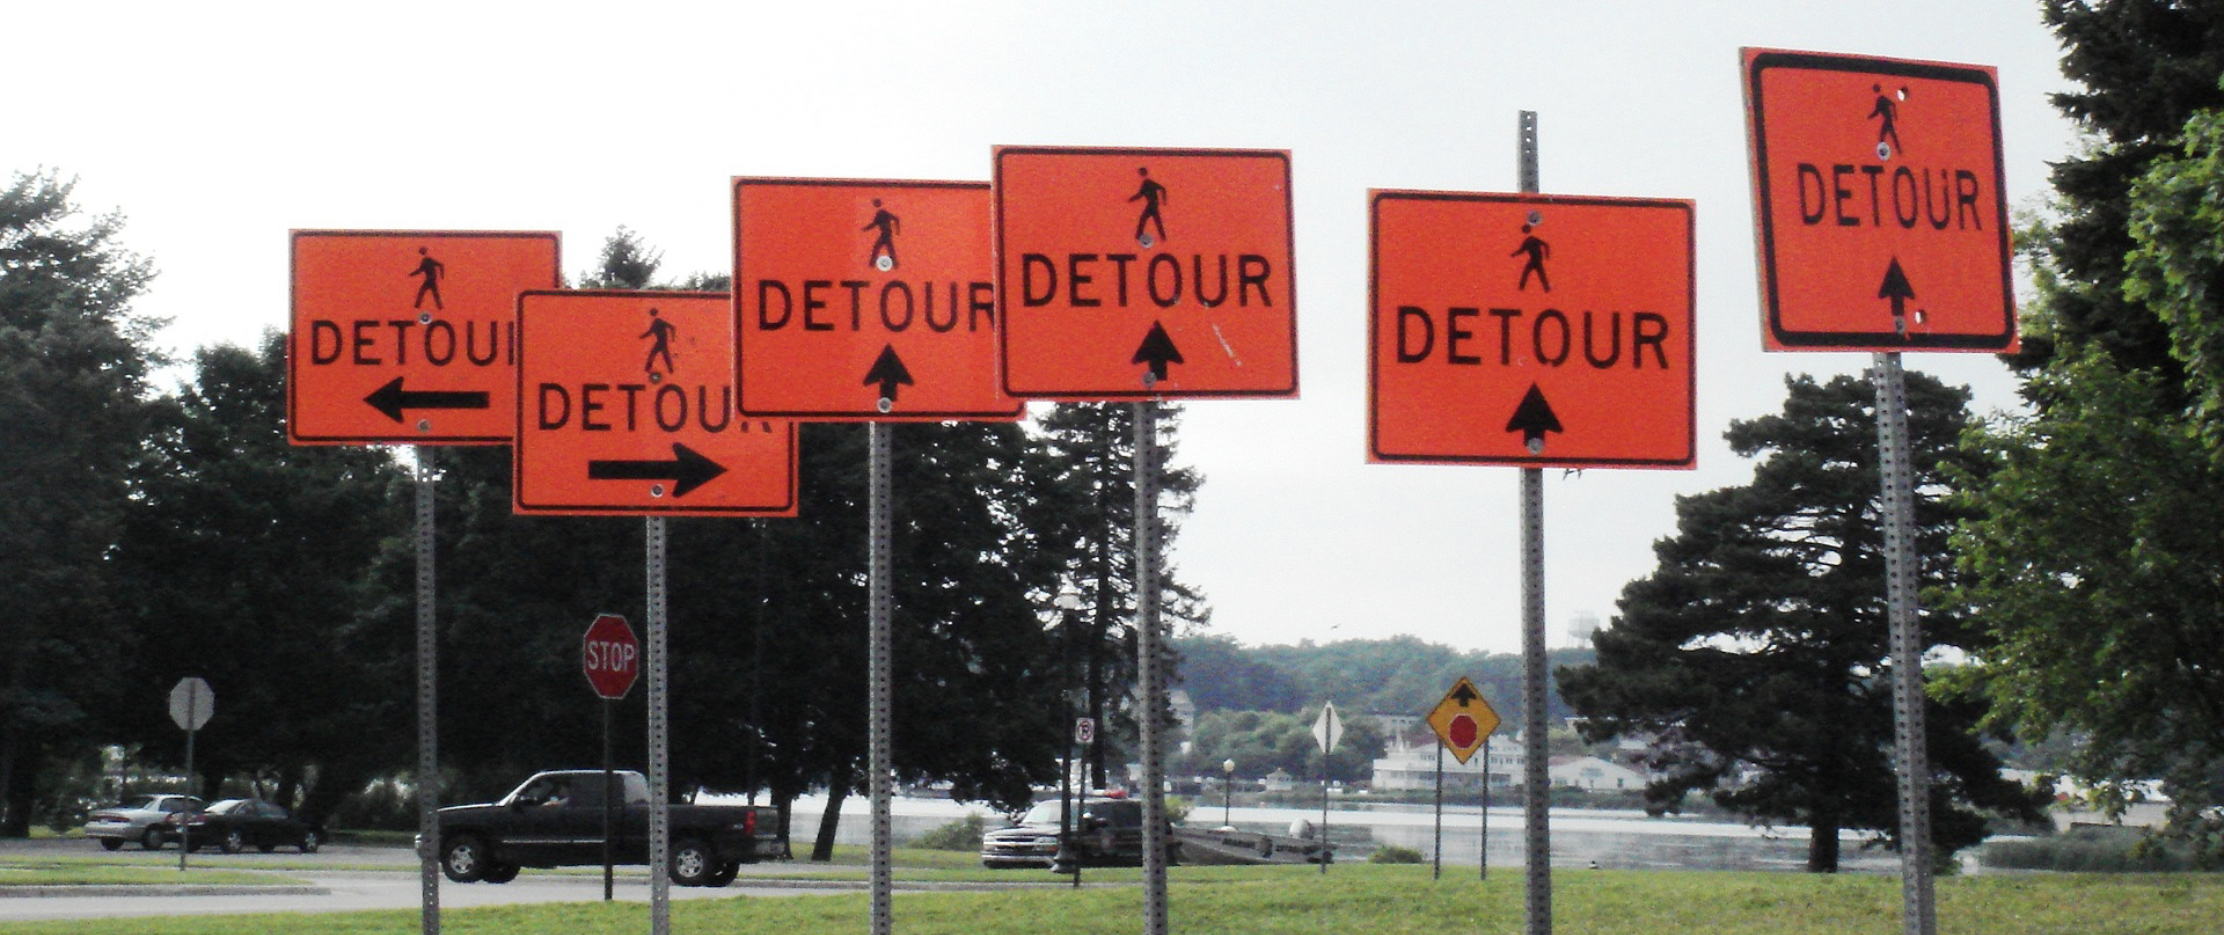 Which Detour Do You Take